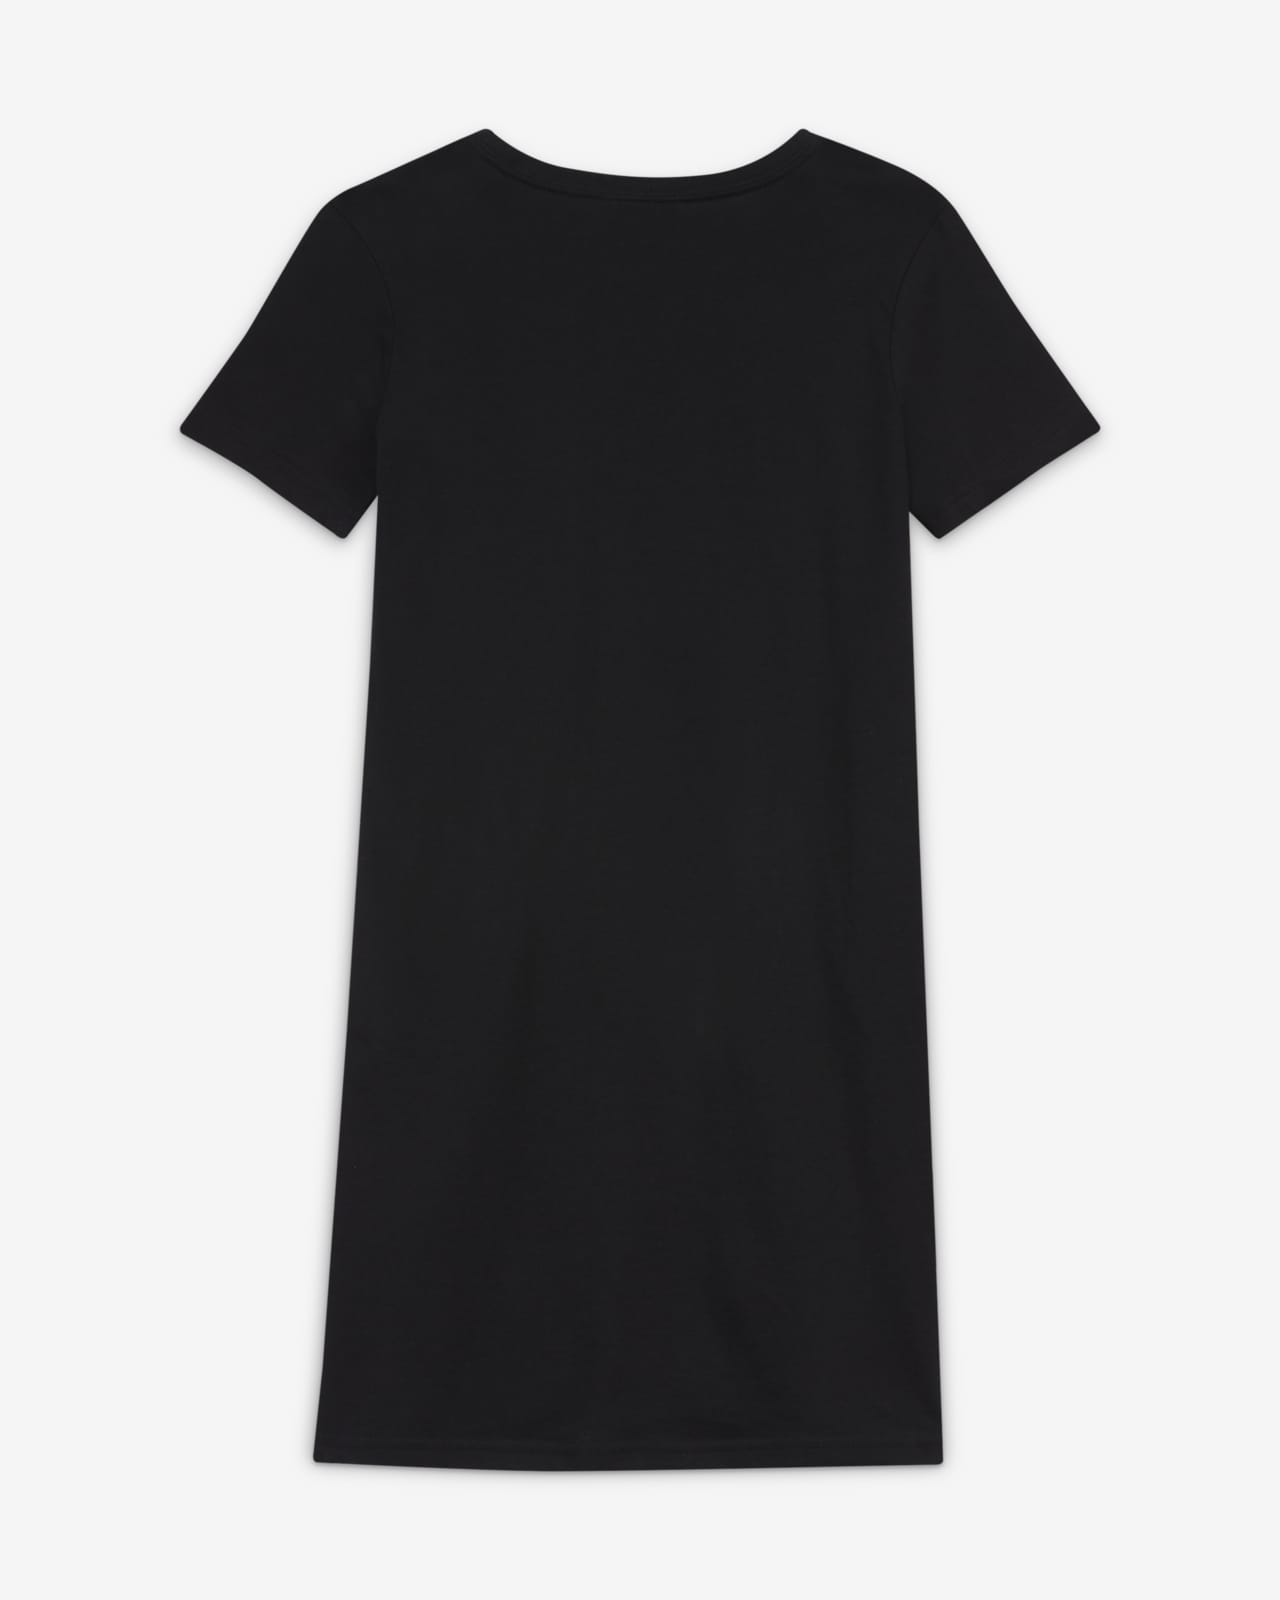 black tee shirt dress